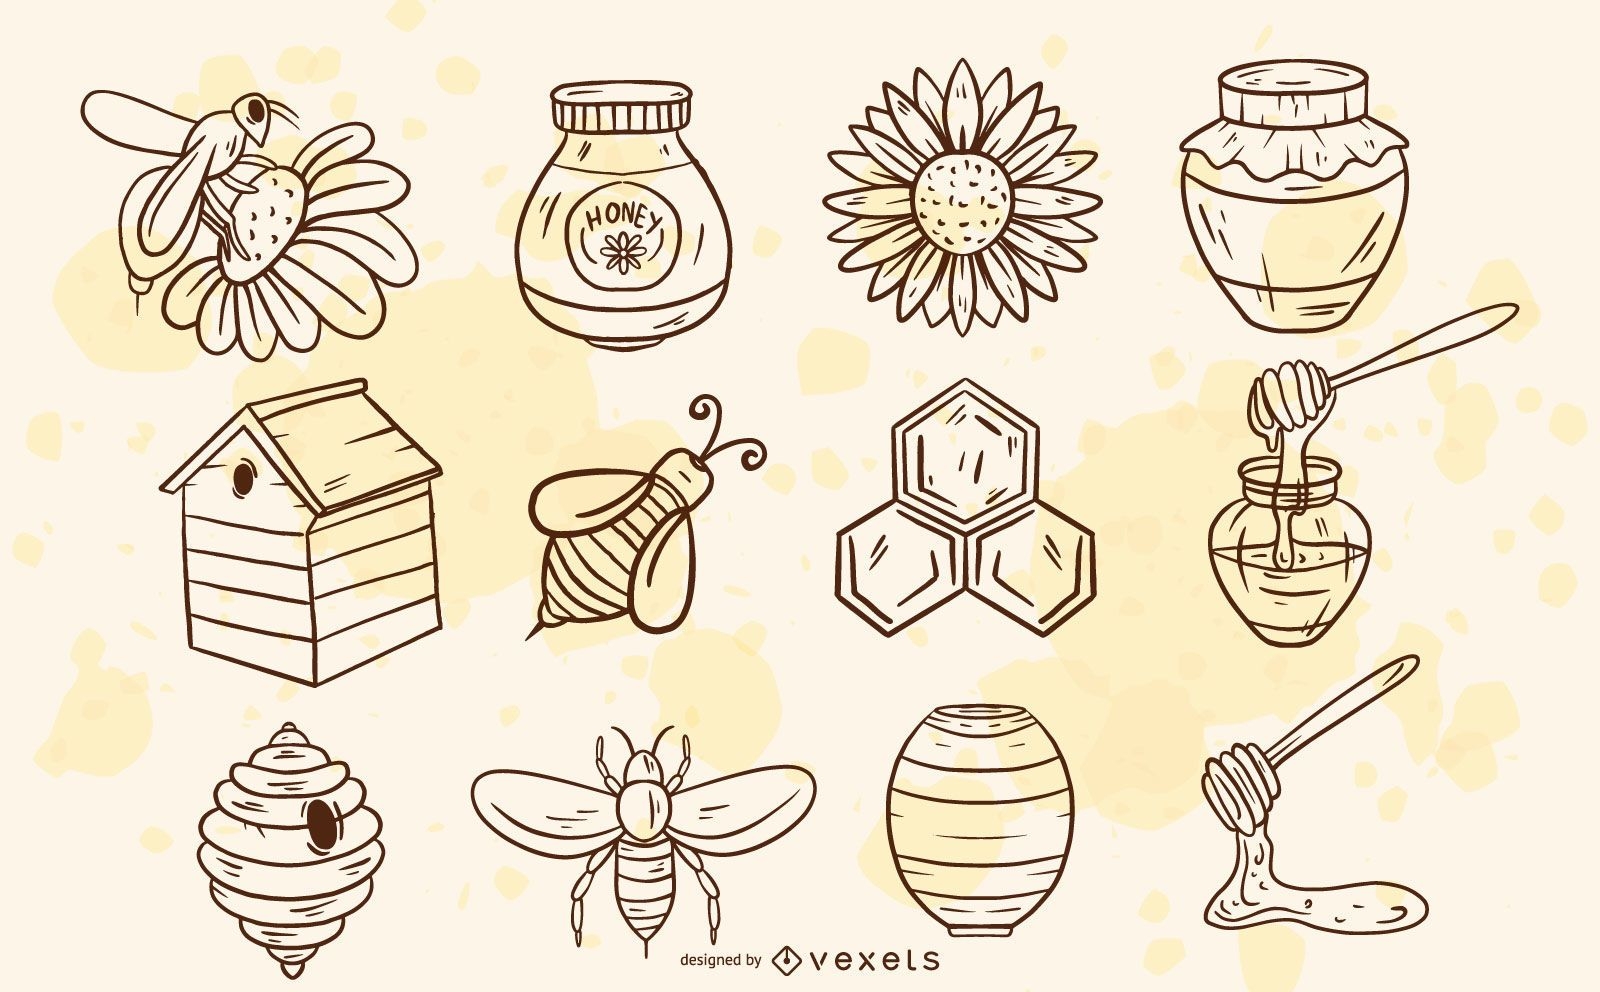 Conjunto de elementos de abelha desenhados ? m?o